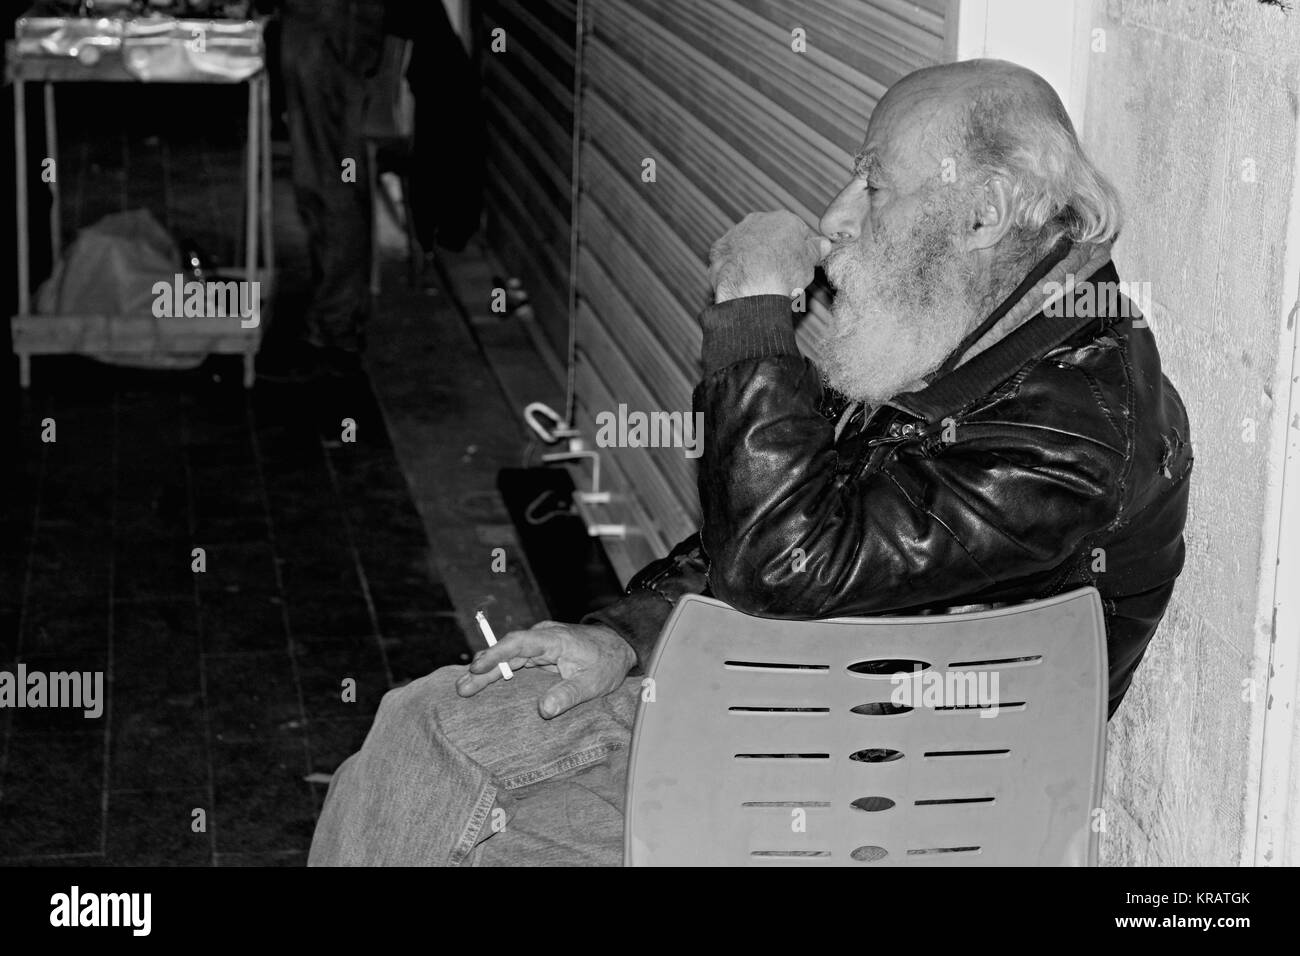 Tired Arab Ambulant in Downtown- 25/04/2017 - Jordan / Amman Sguardi Aridi by Ali Raffaele Matar shot in April 2017 - Sad old man sitting in Al Balad Stock Photo